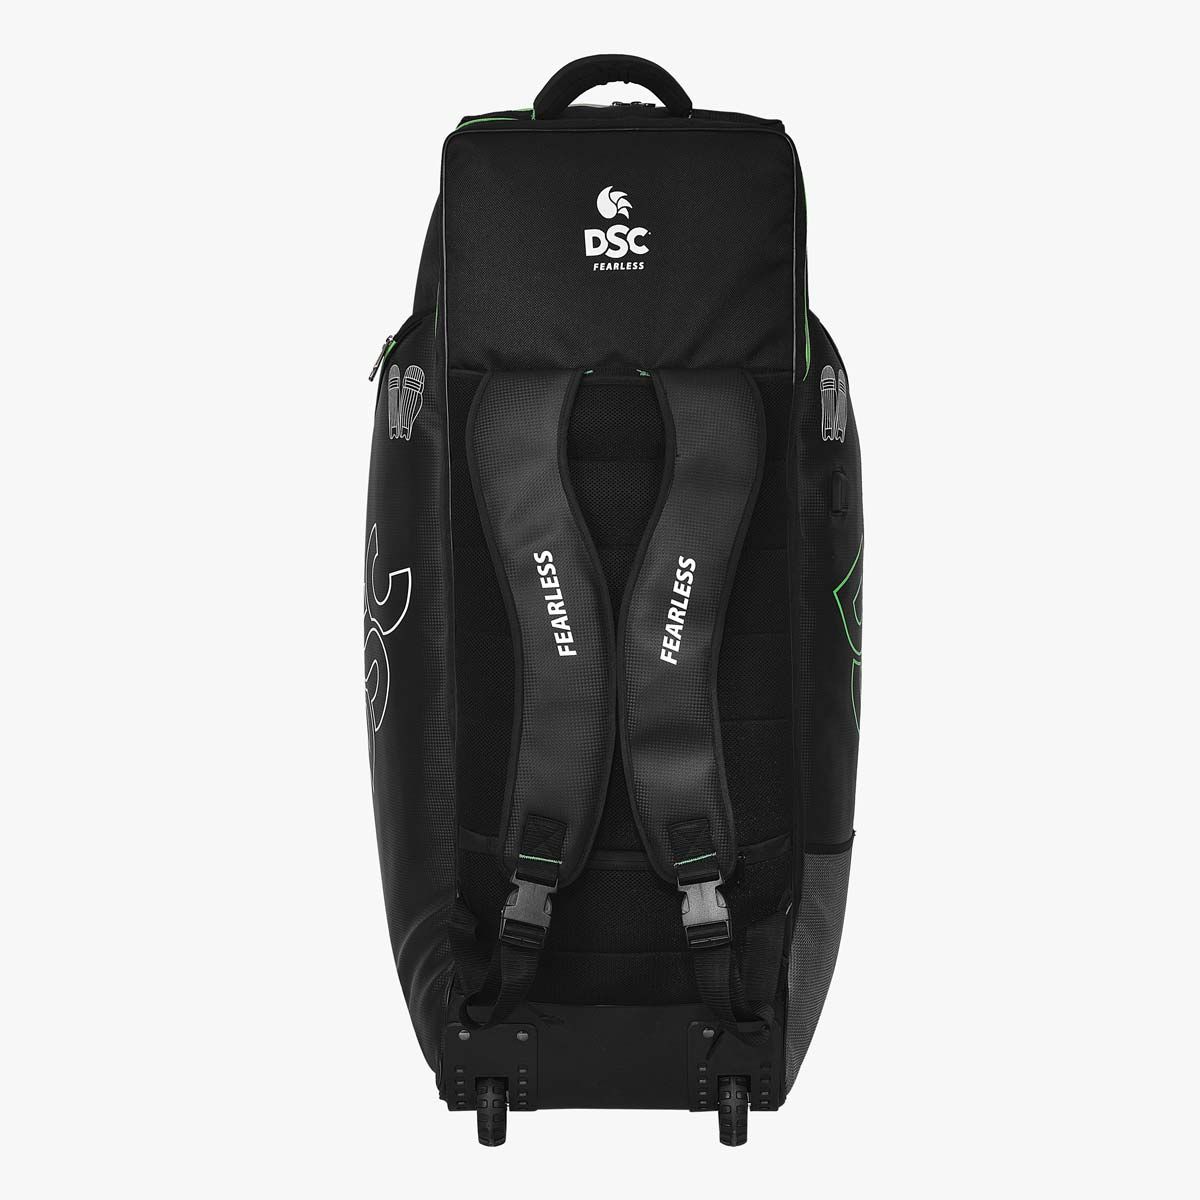 Spliit Premium Duffle Bag